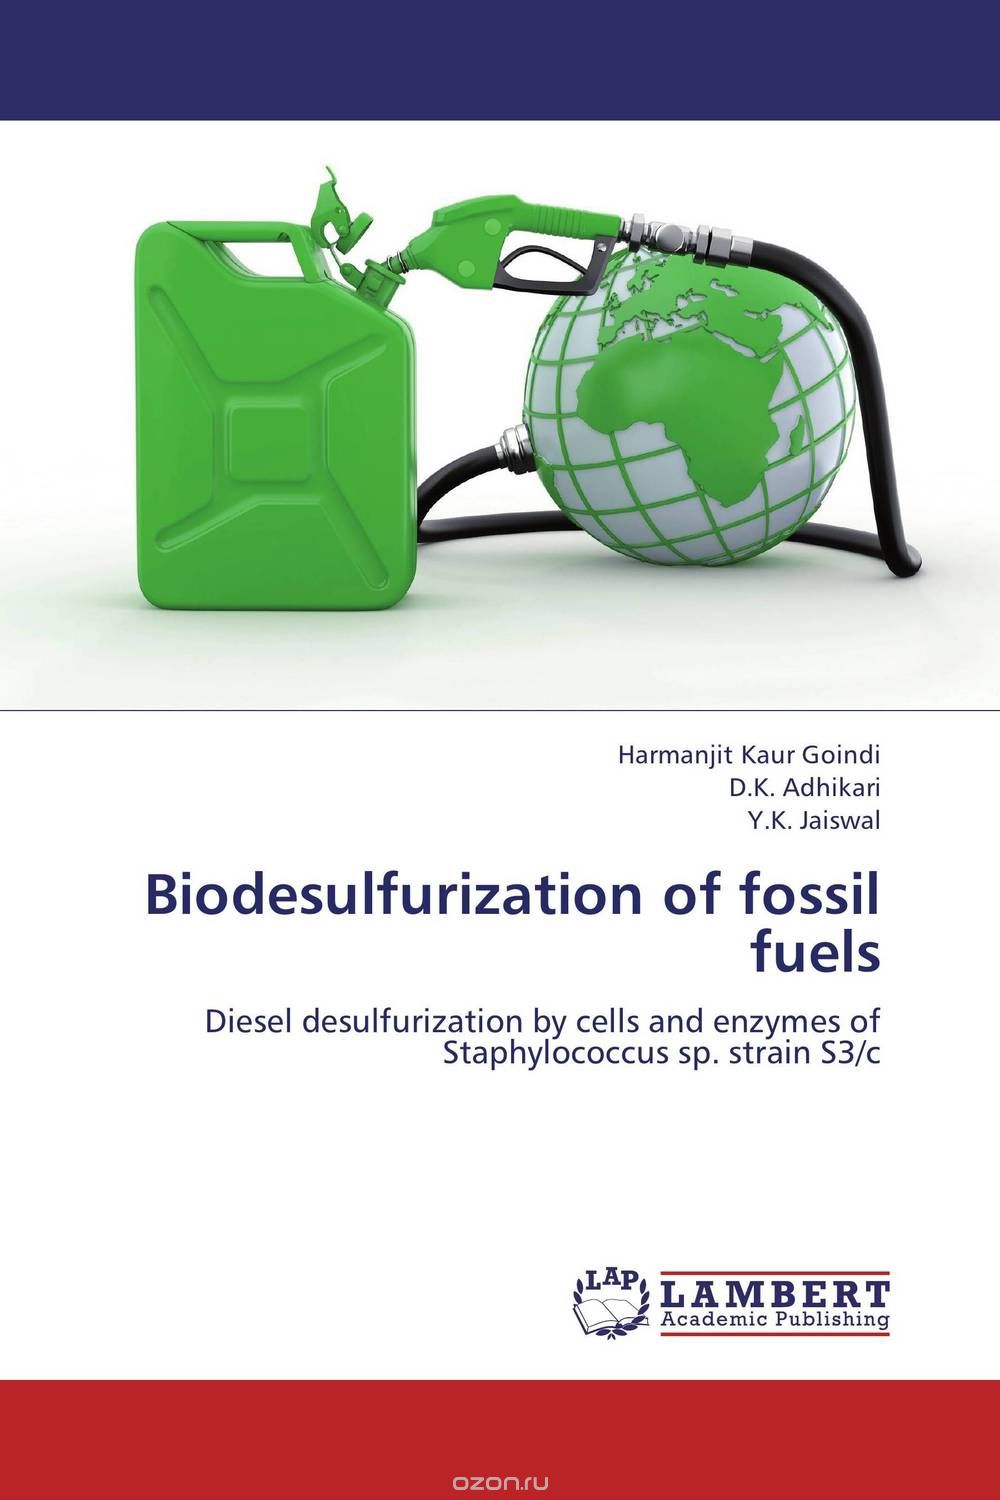 Скачать книгу "Biodesulfurization of fossil fuels"